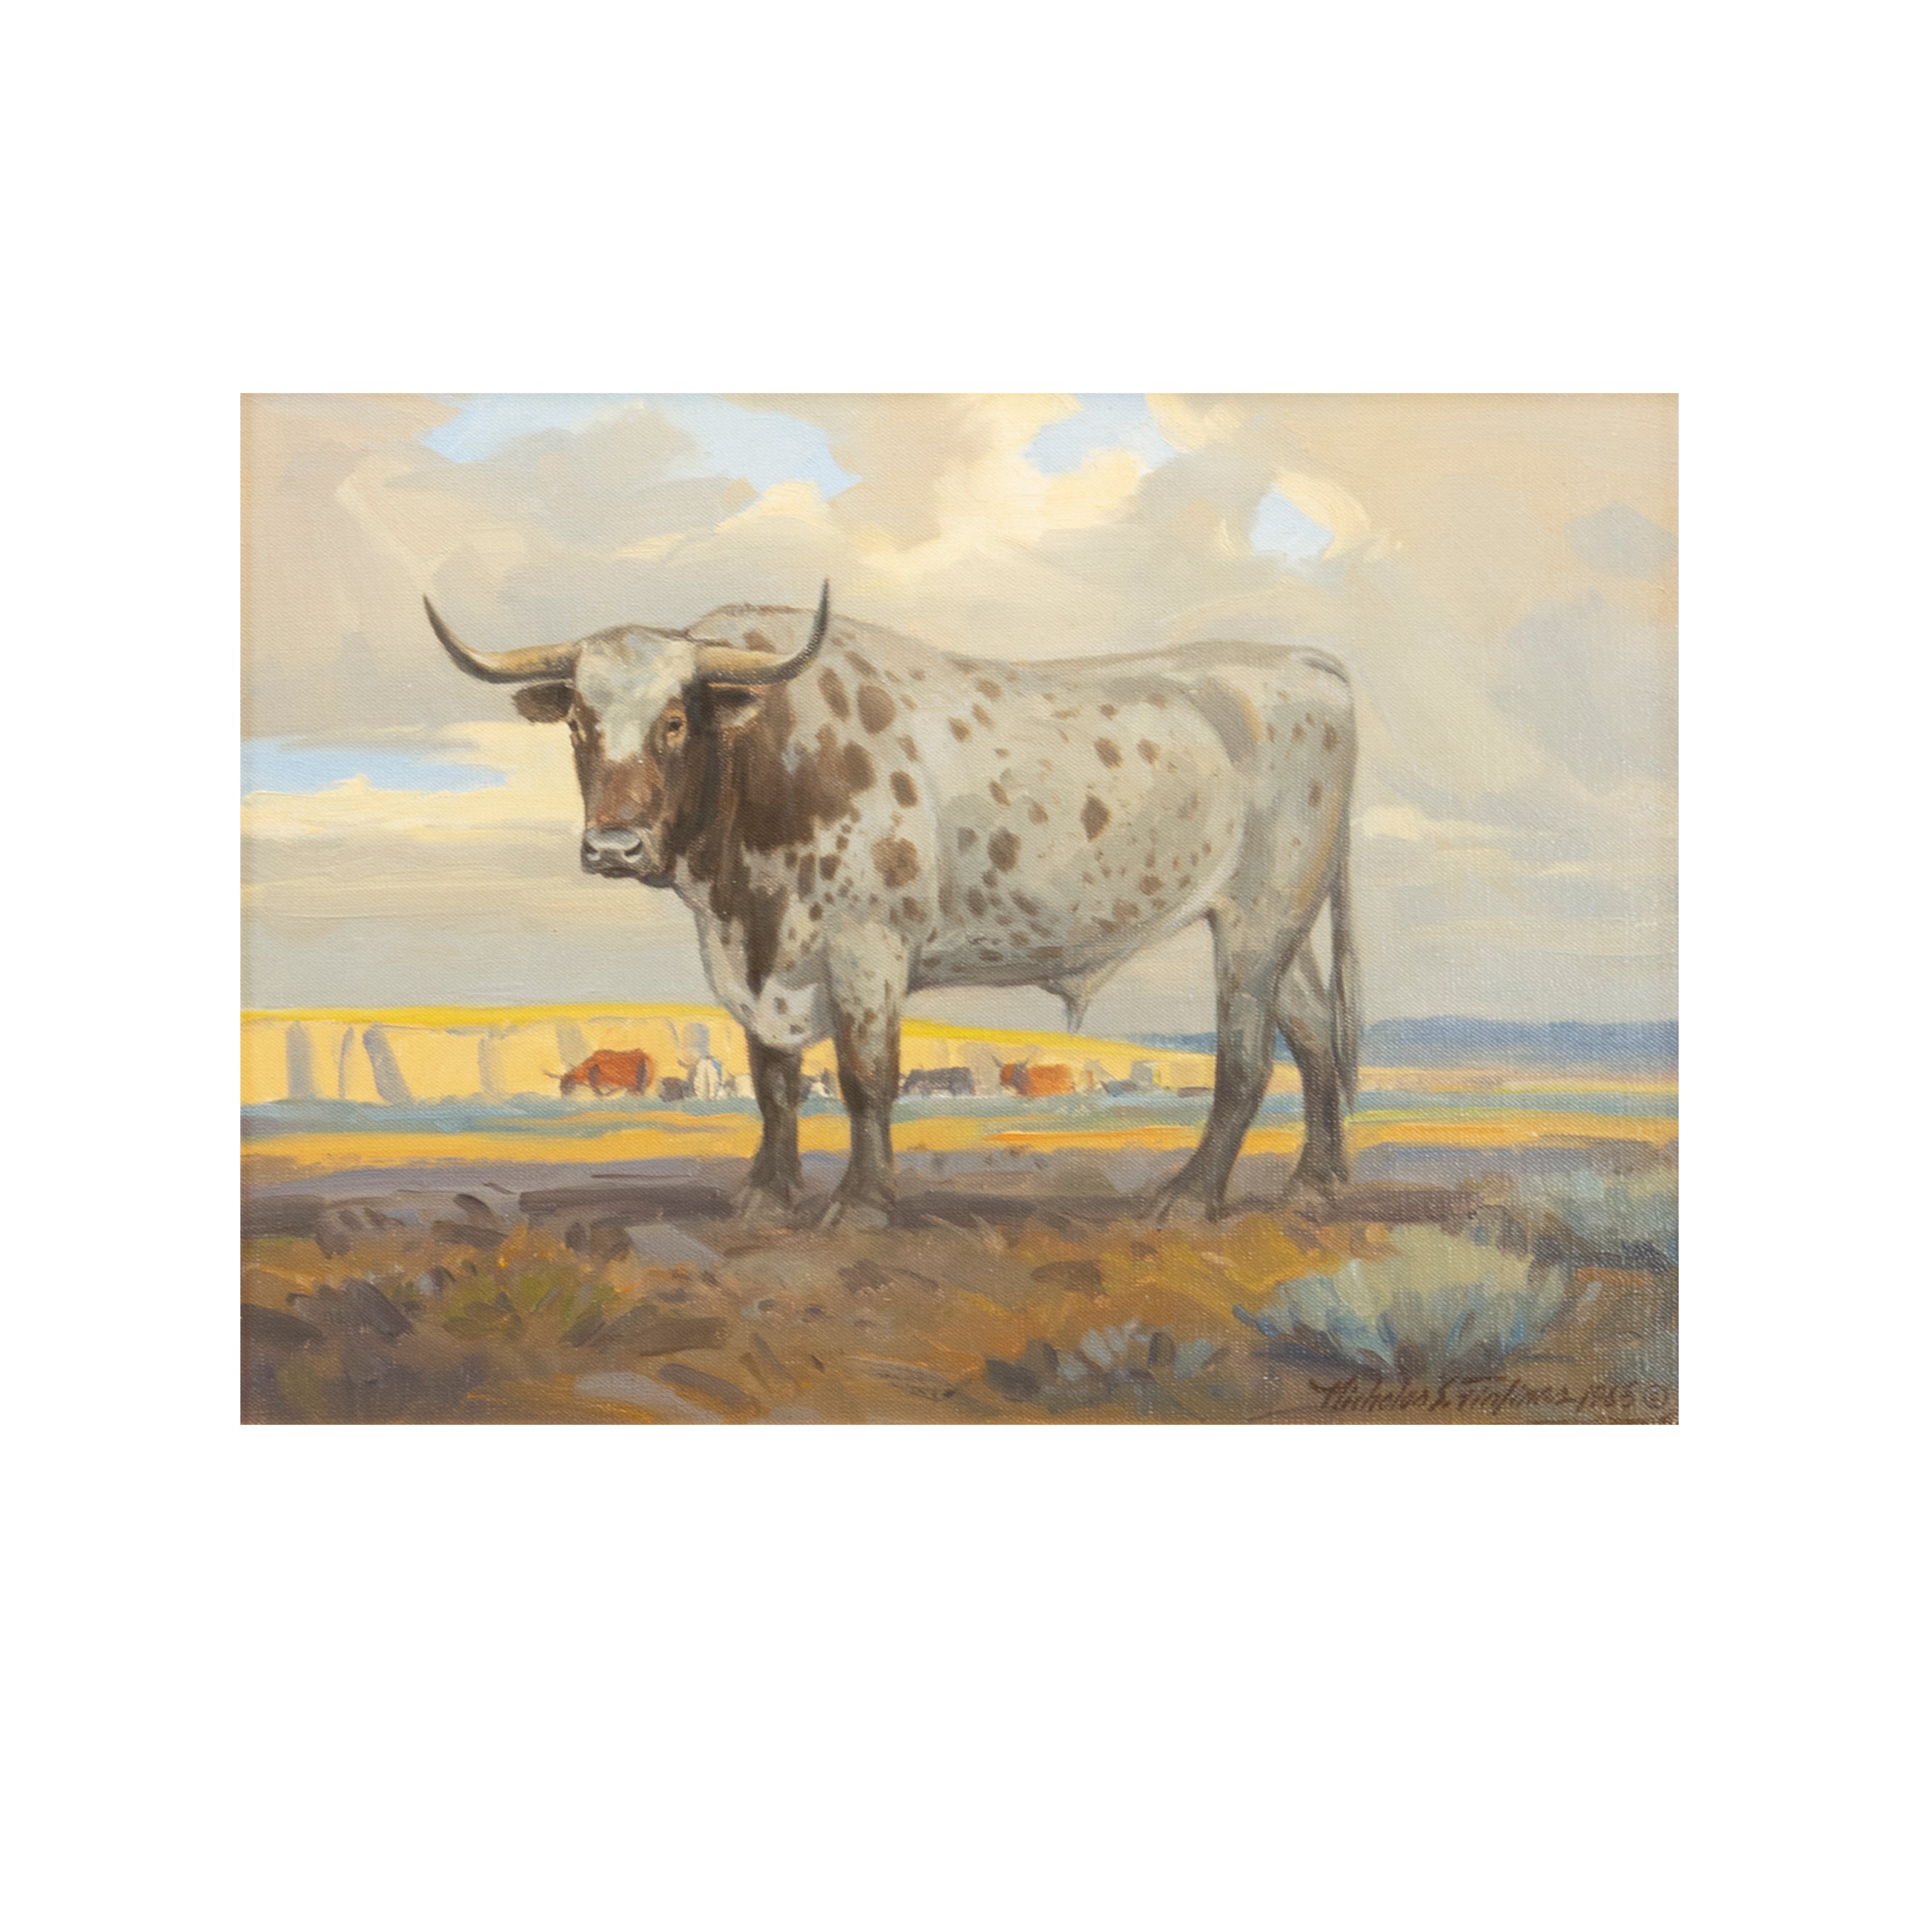 "The Longhorn Bull" by Nicholas S. Firfires, Fine Art, Painting, Western